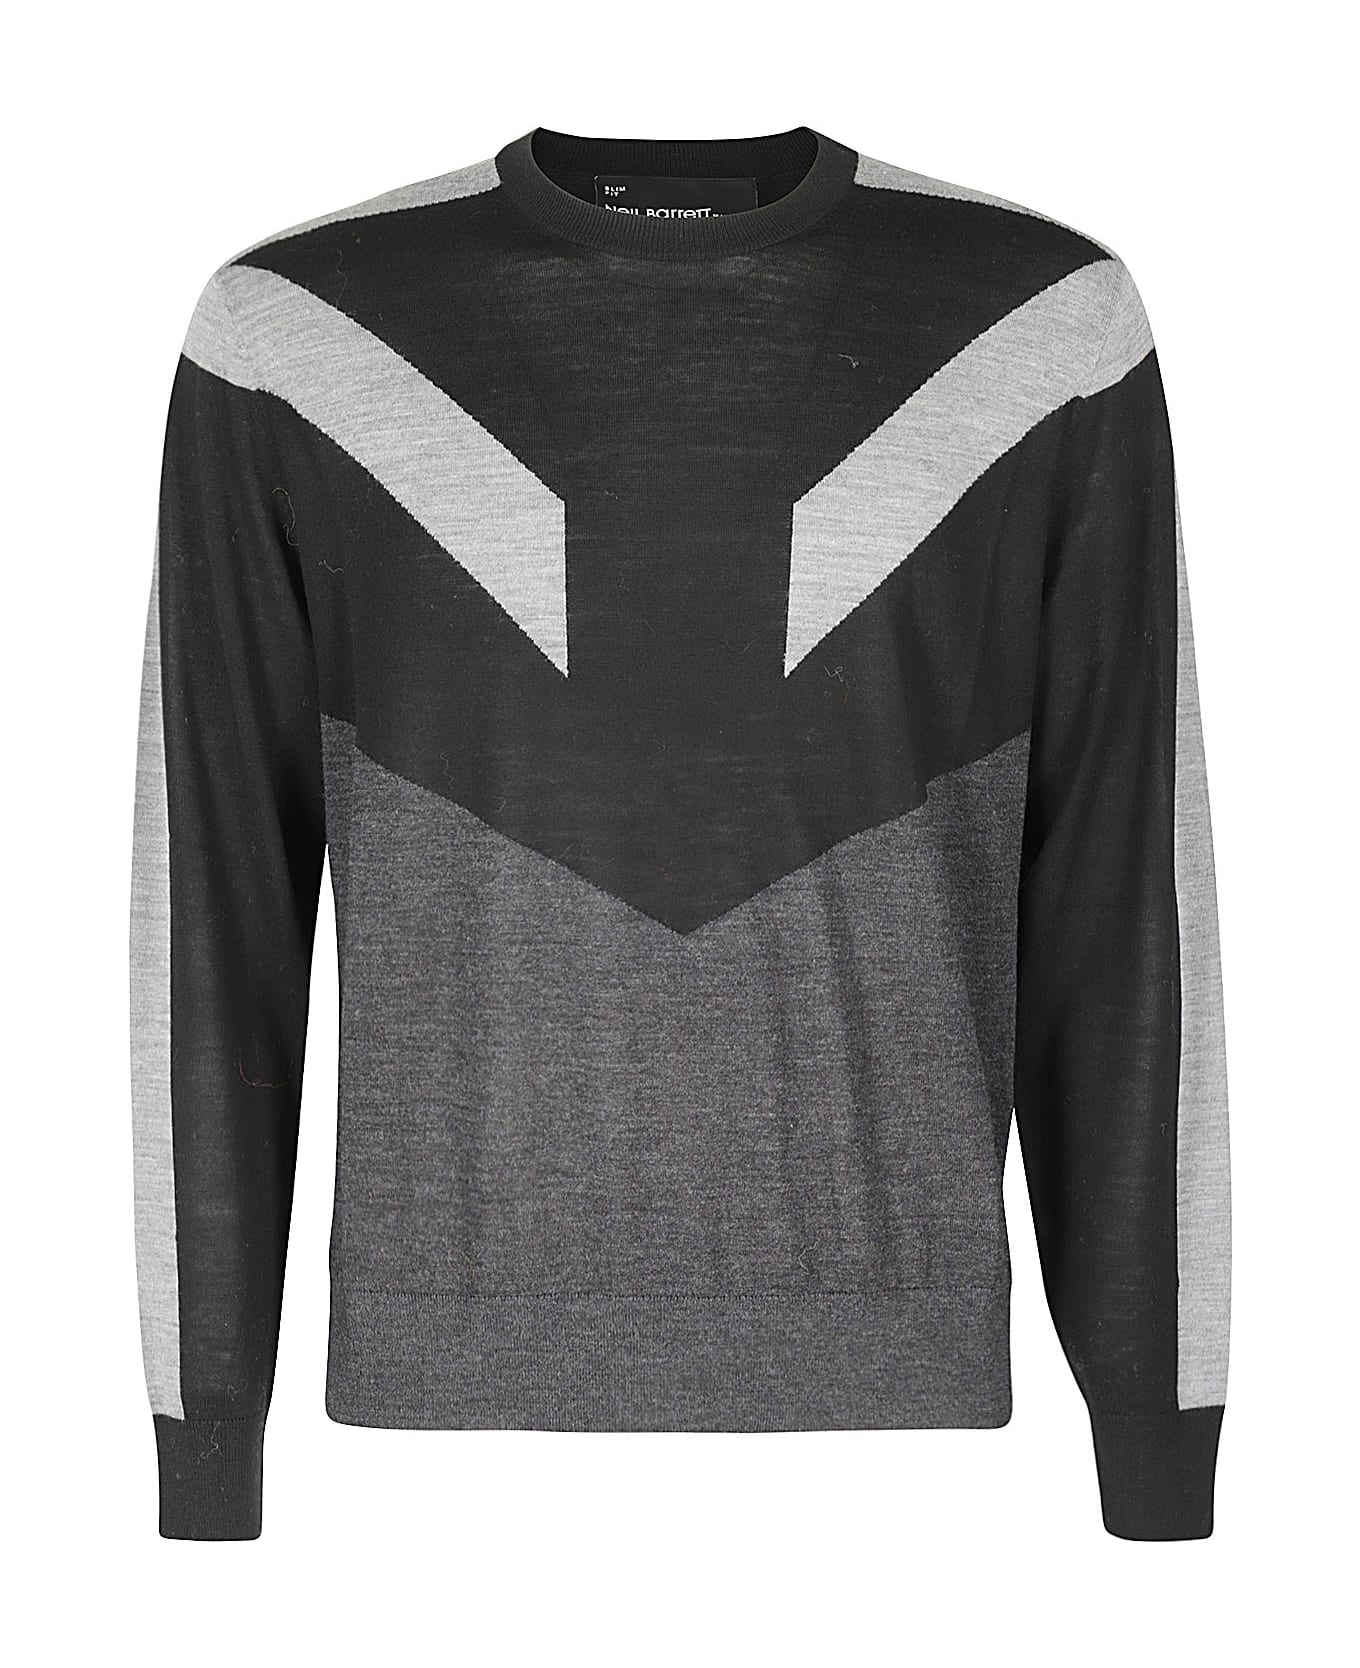 Neil Barrett Modernist Wool Light Sweater - Blacks